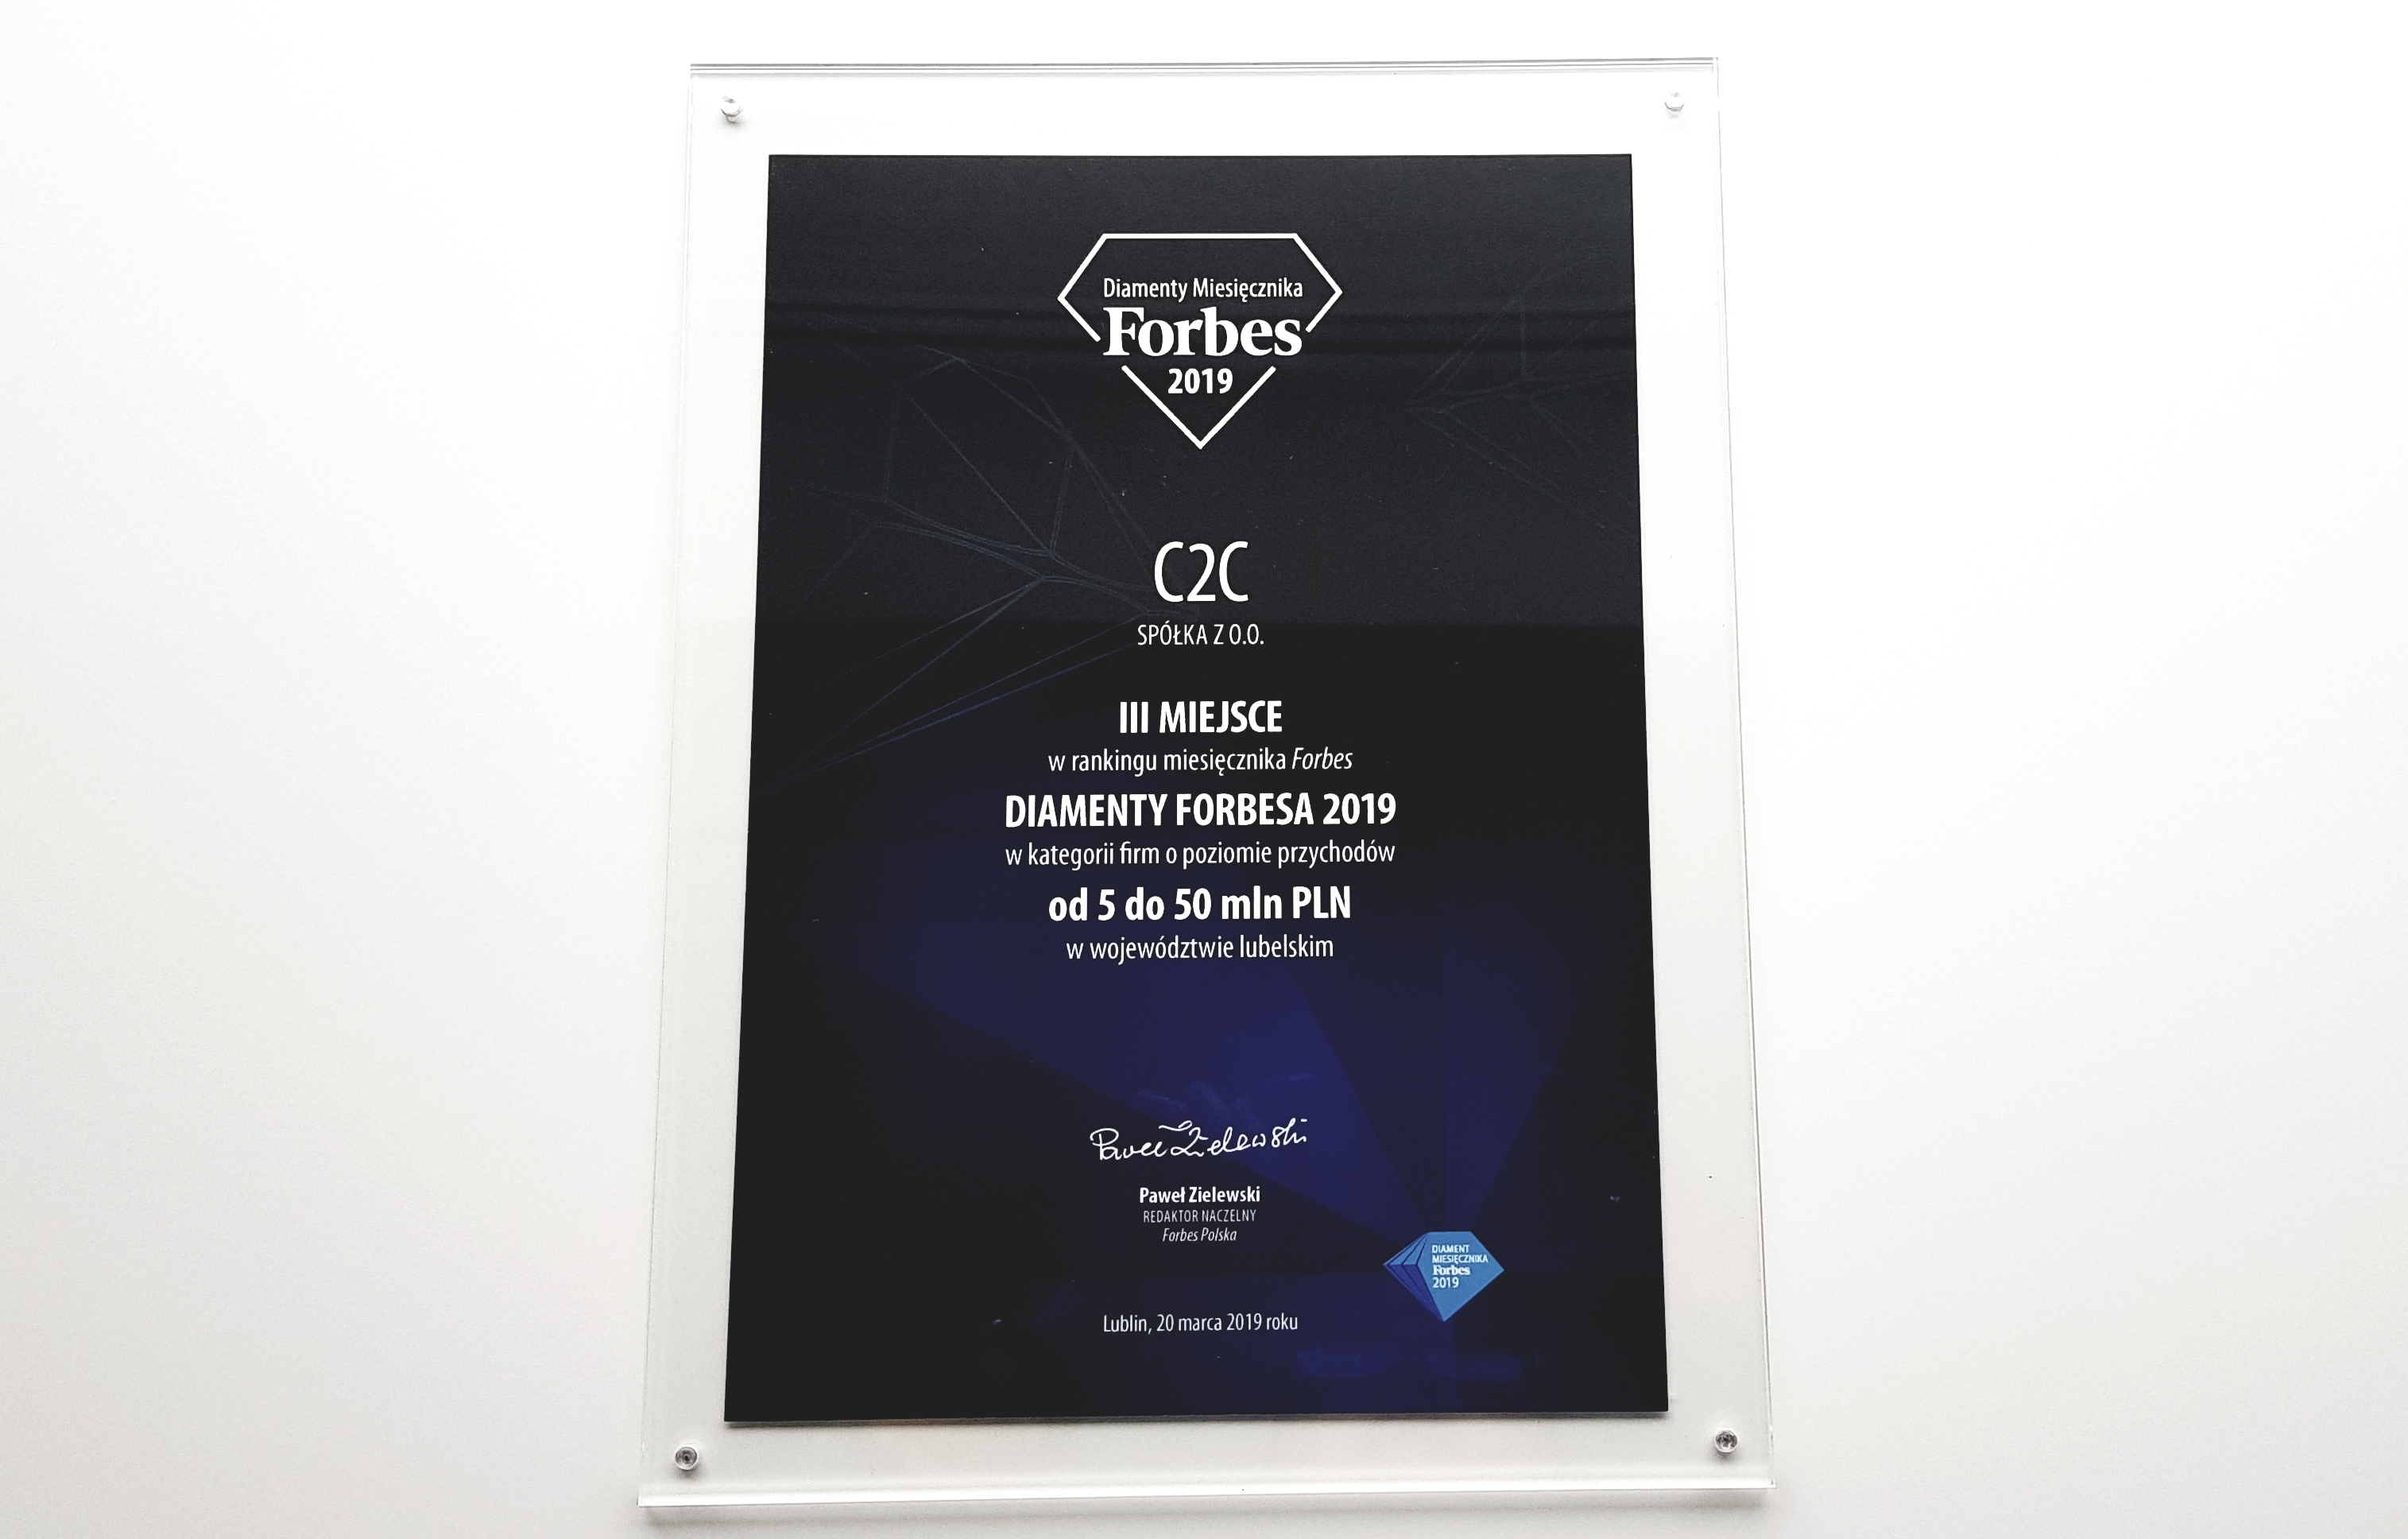 The framed prize Forbes Diamonds 2019 for company C2C sp. z o. o. o.